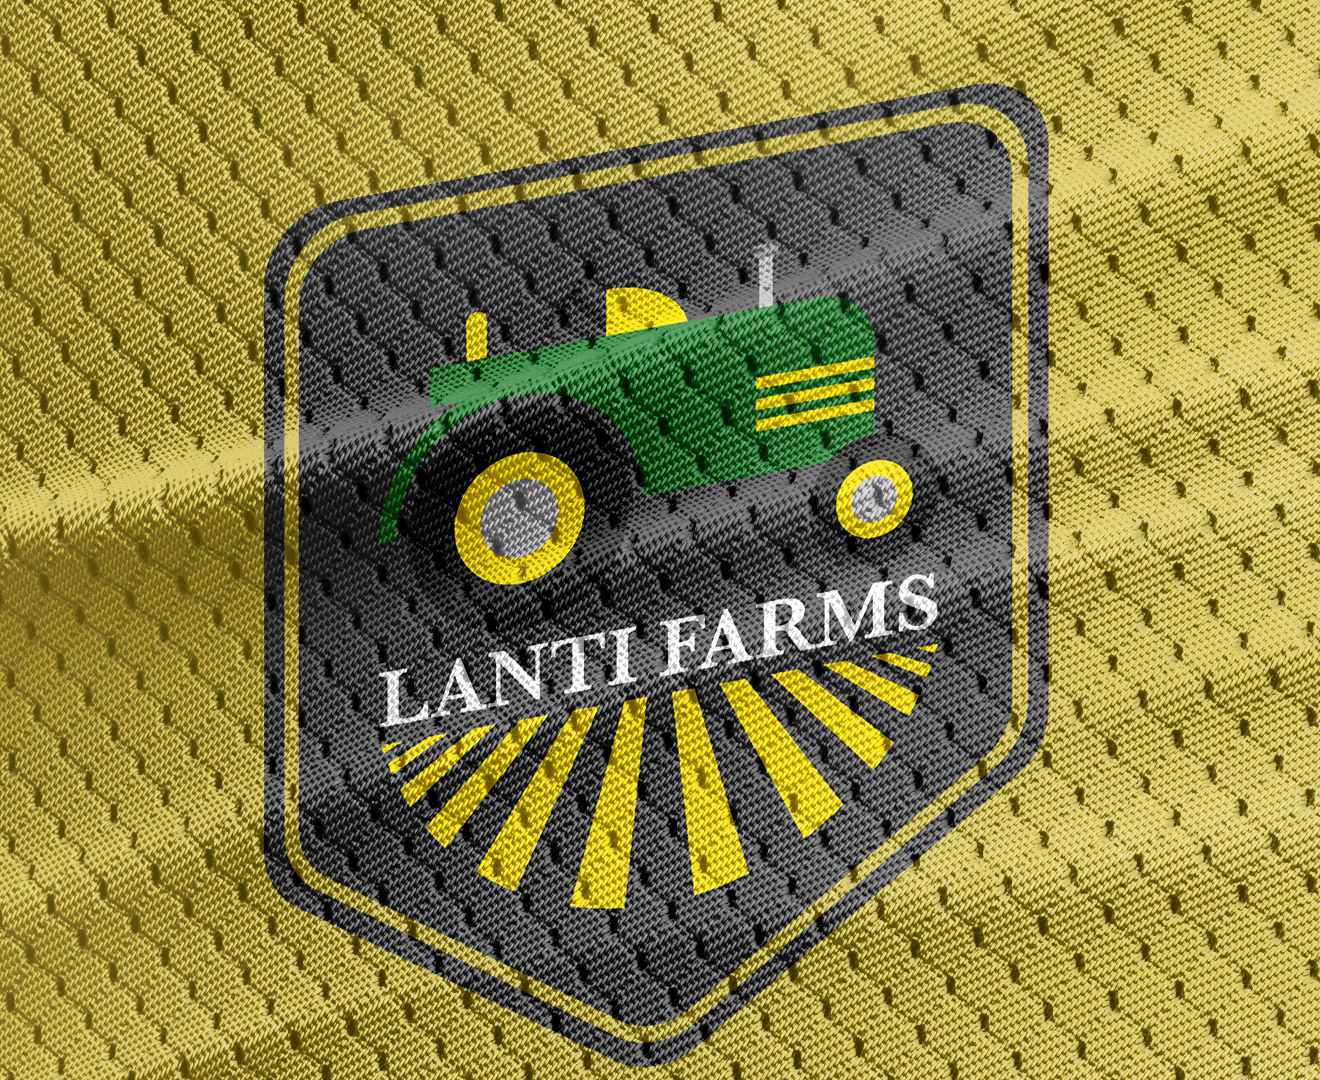 Fleece John Deere Logos Green Tractors Farmer Farming Farmland Country Fleece  Fabric Print by the Yard (